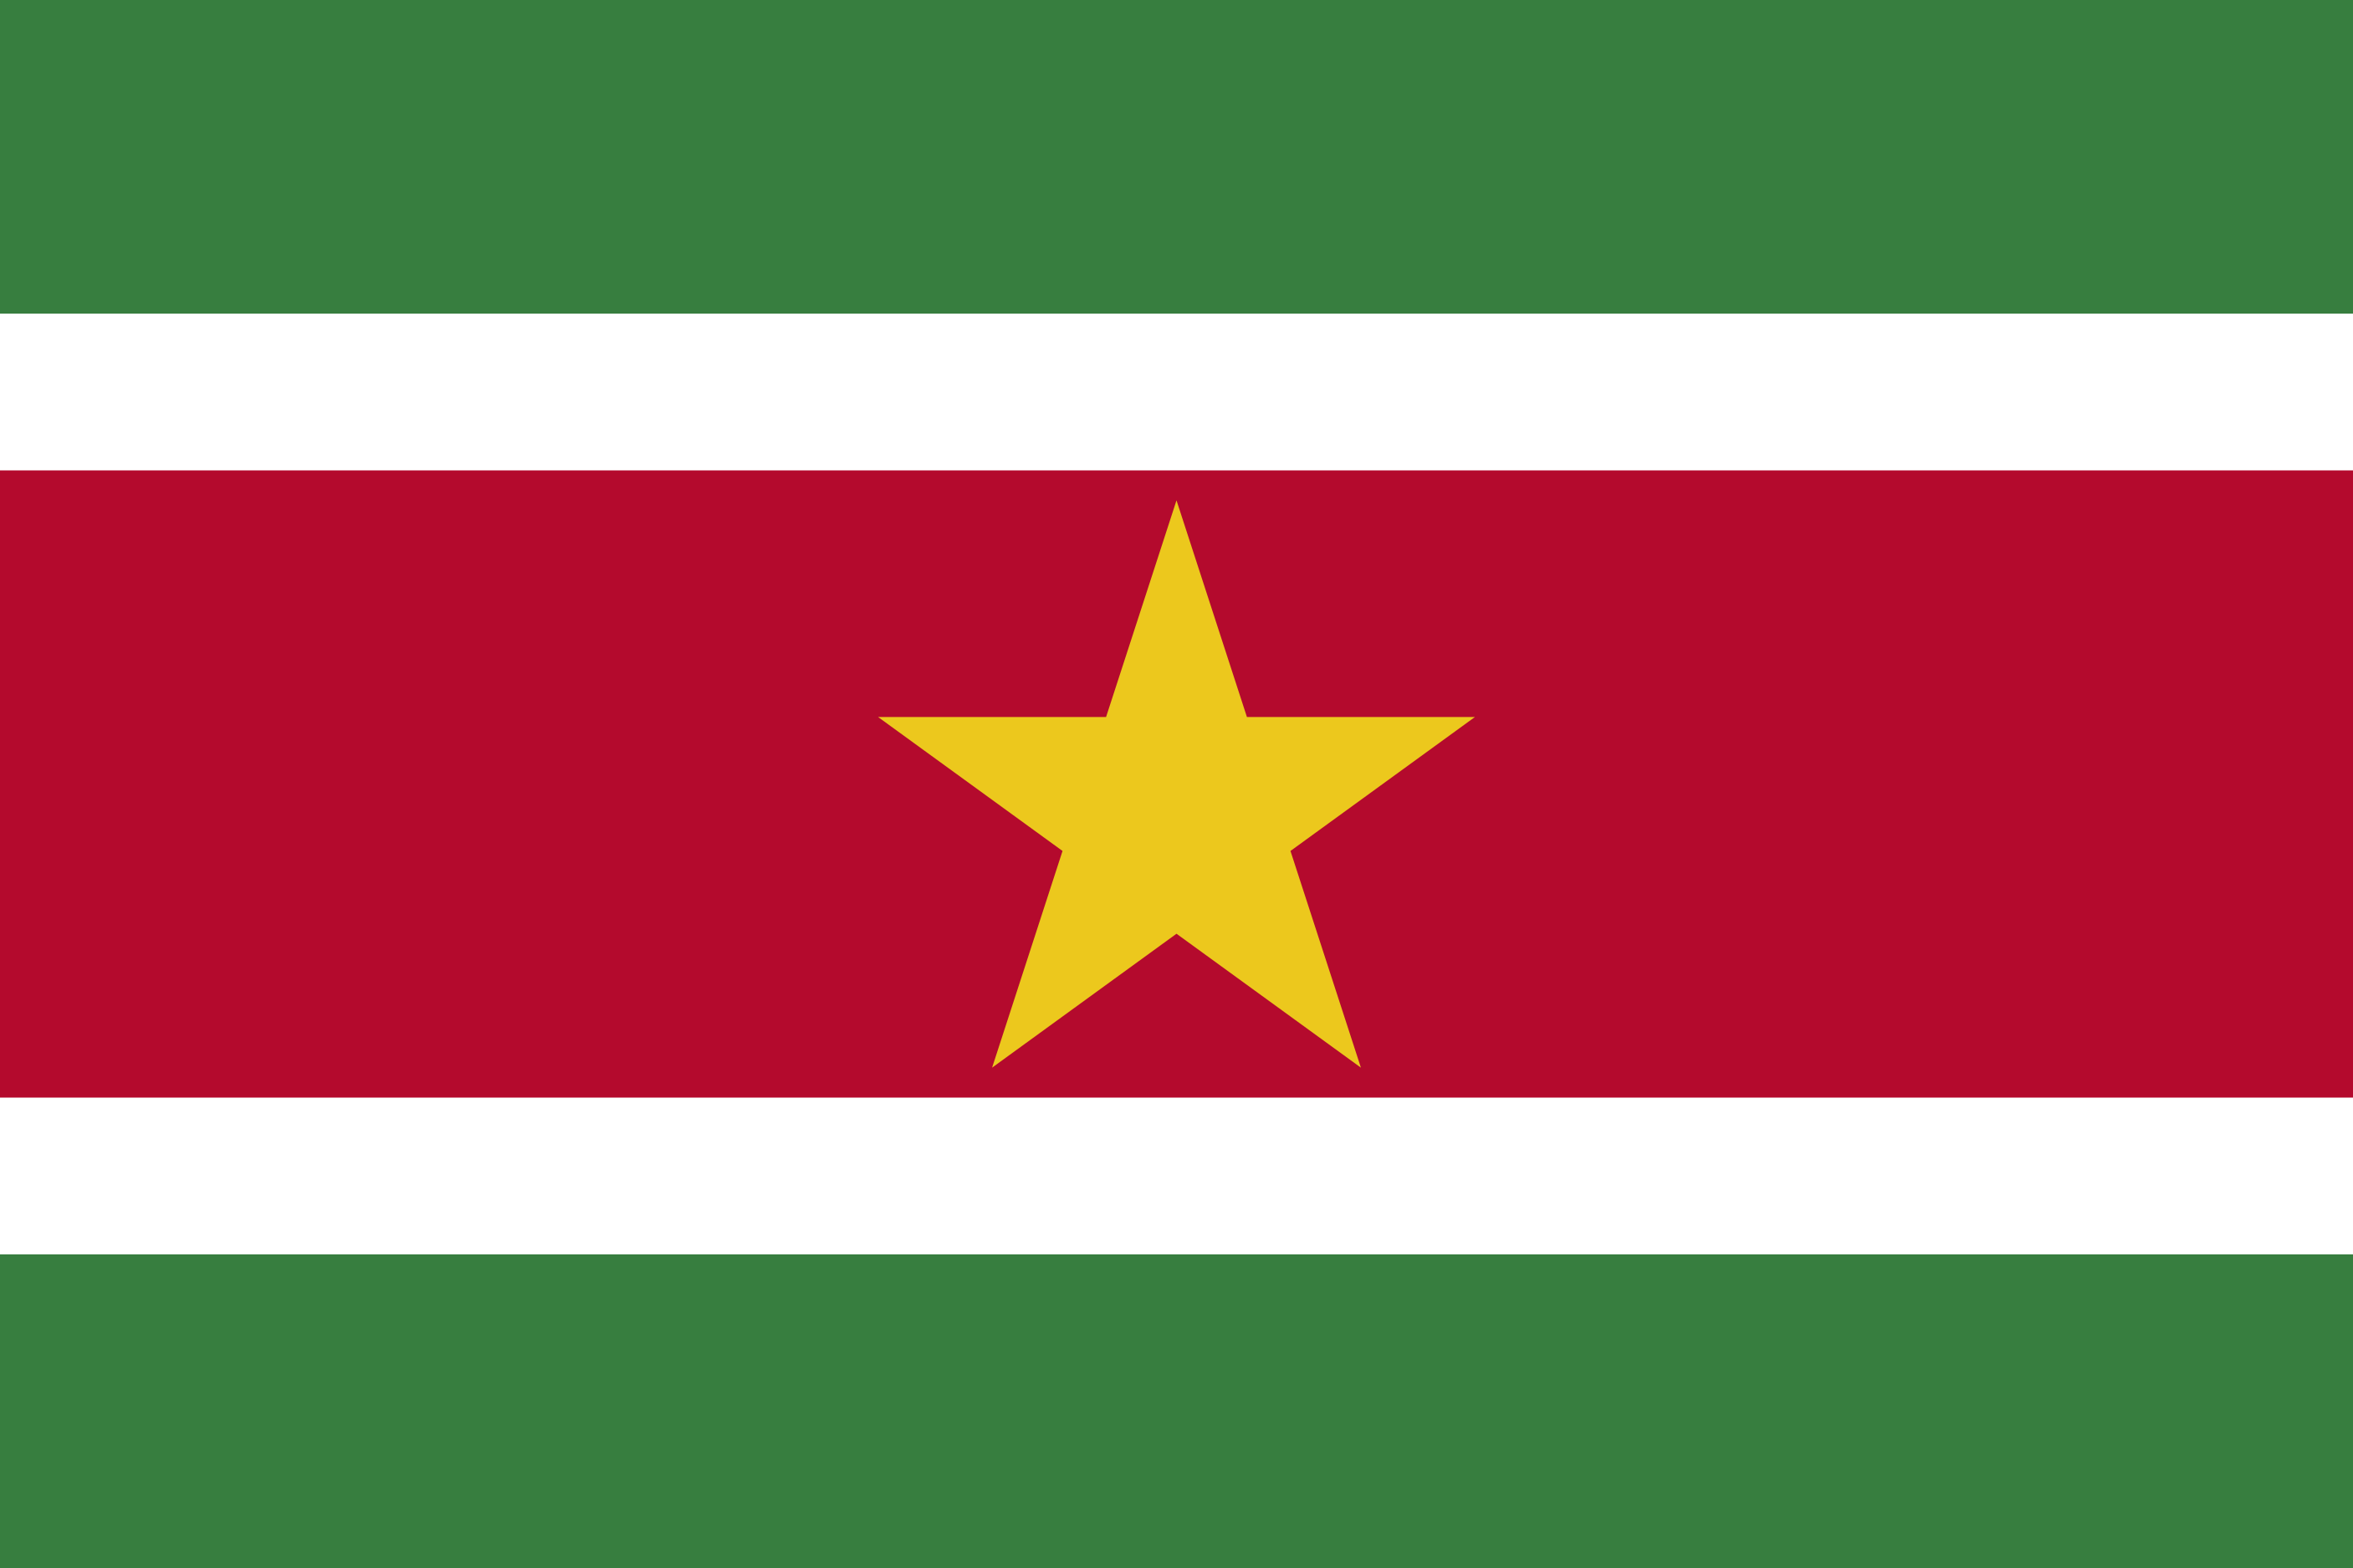 Free Suriname Flag Documents: PDF, DOC, DOCX, HTML & More!